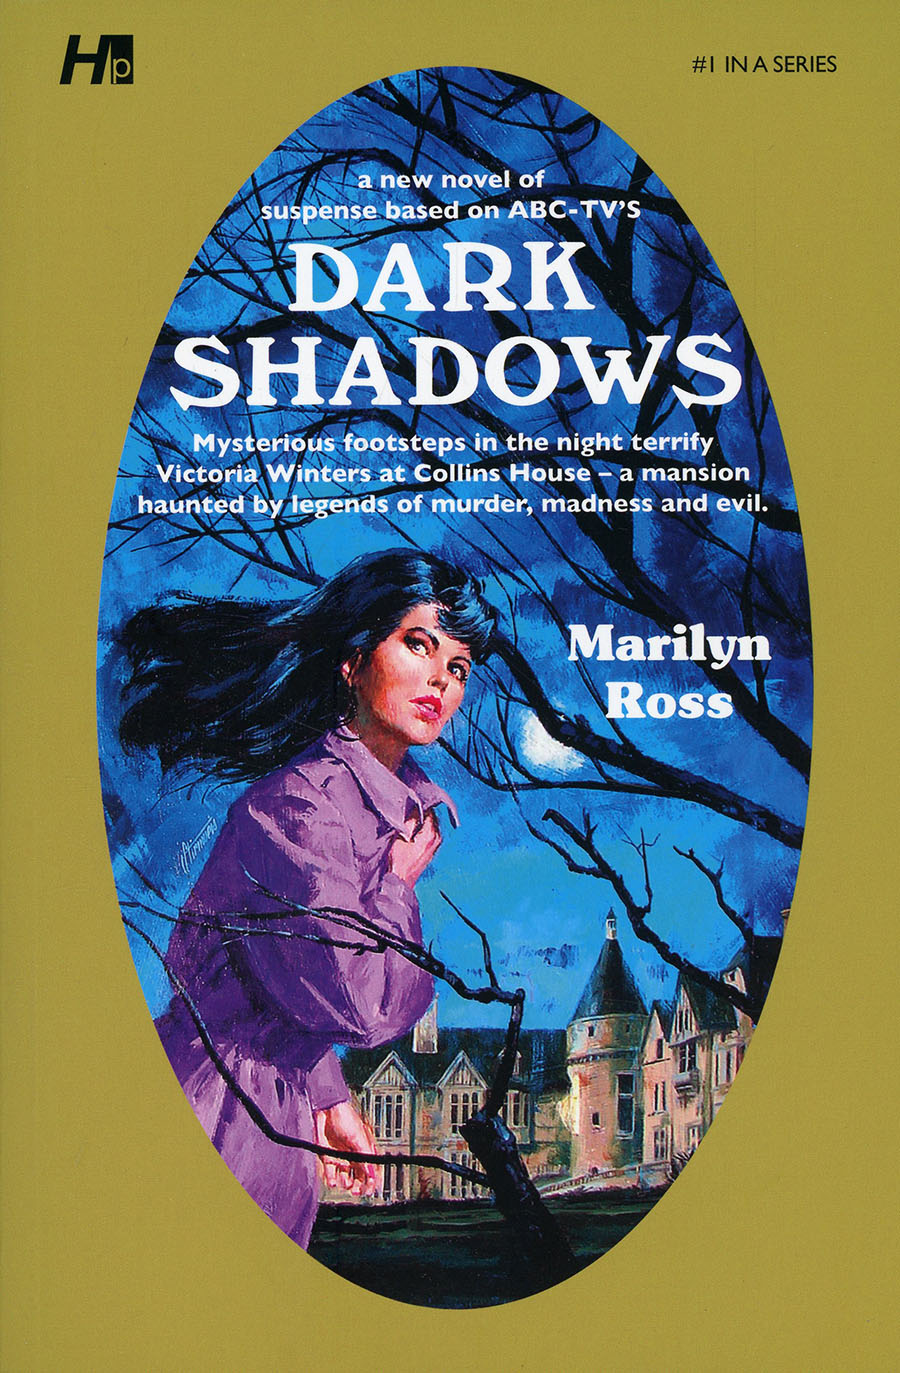 Dark Shadows Marilyn Ross Paperback Library Novel Vol 1 TP 2nd Edition